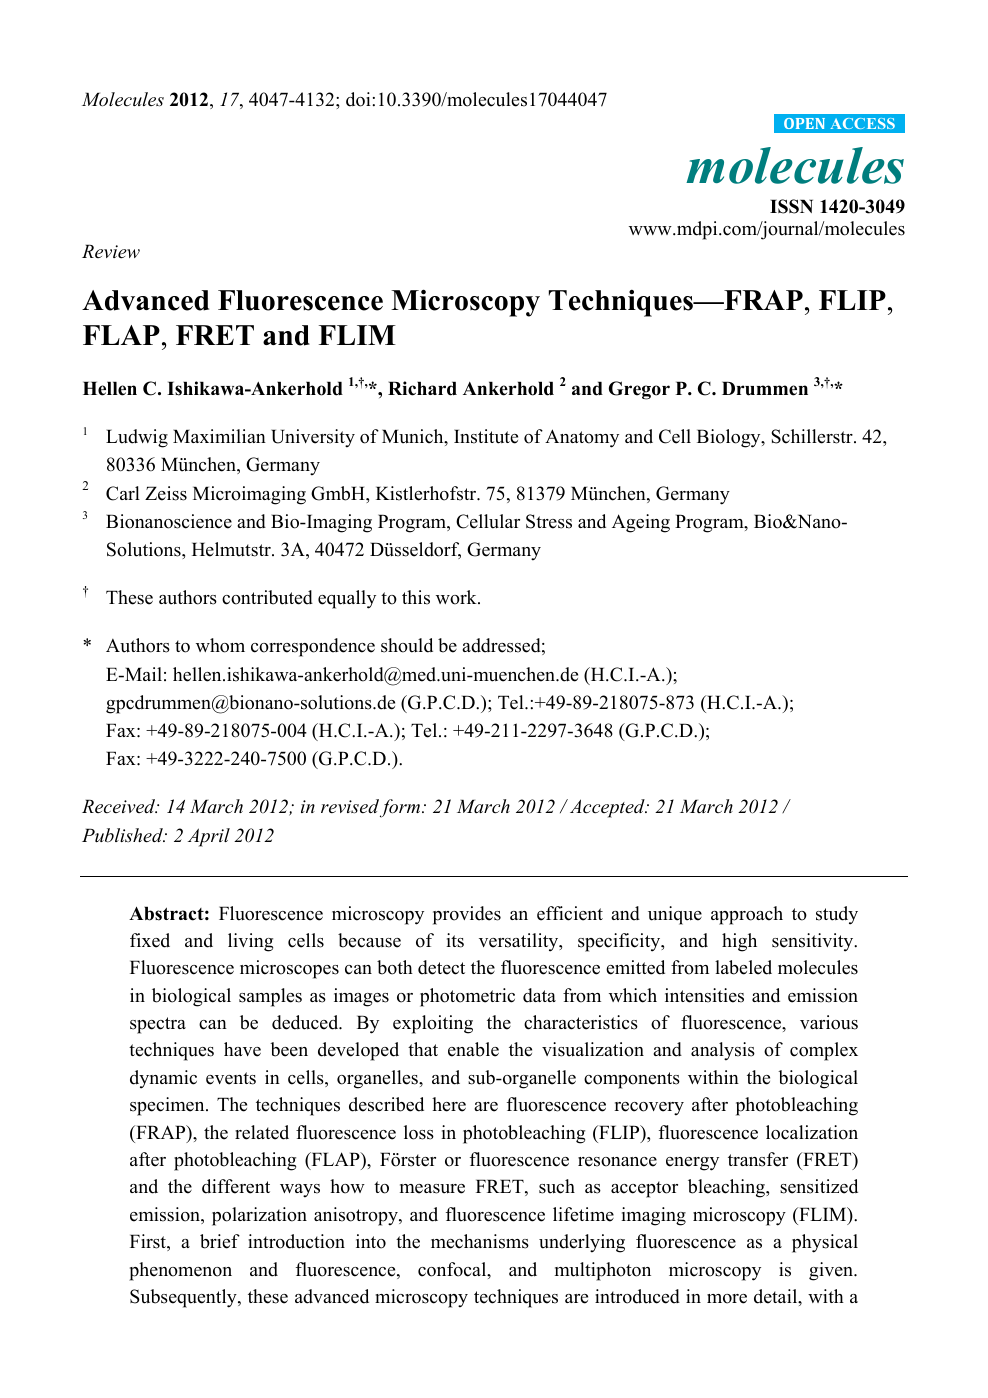 Advanced Fluorescence Microscopy Techniques—FRAP, FLIP, FLAP, FRET 